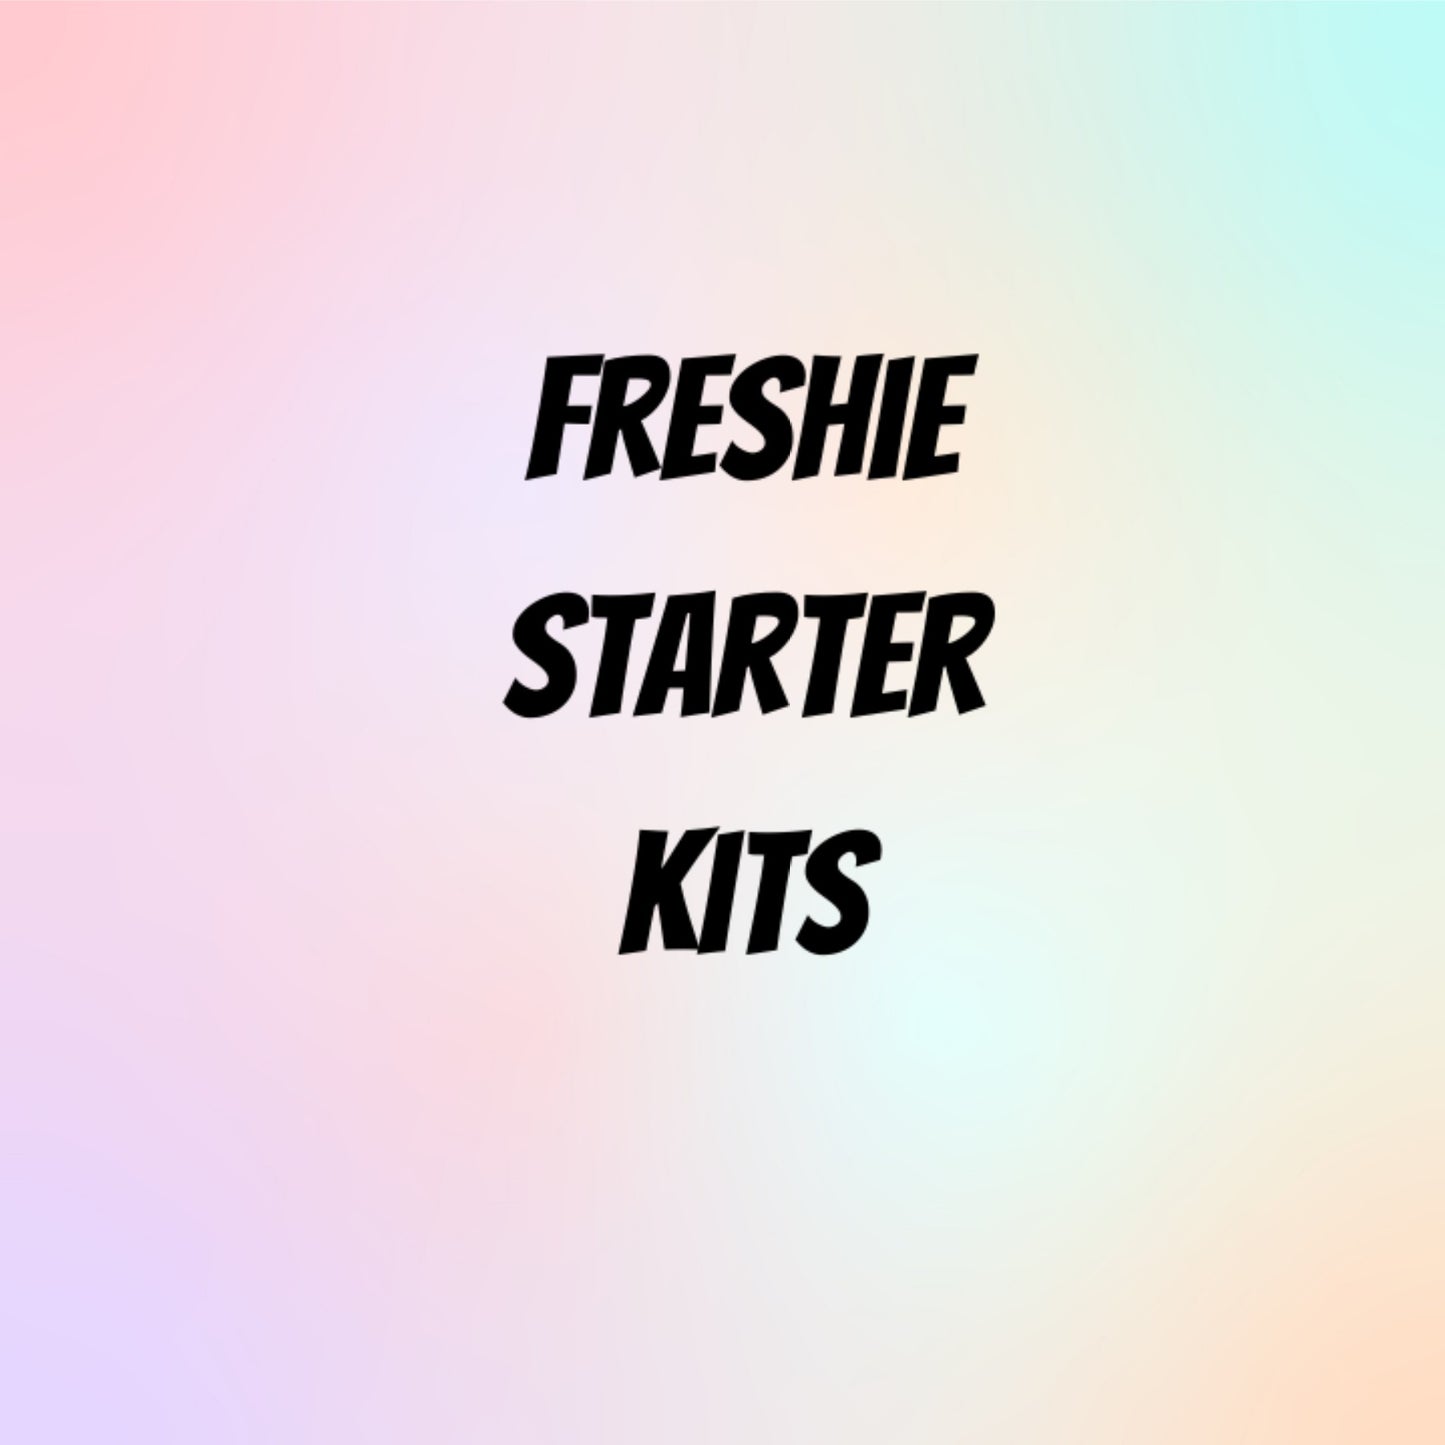 Freshie Starter Kits